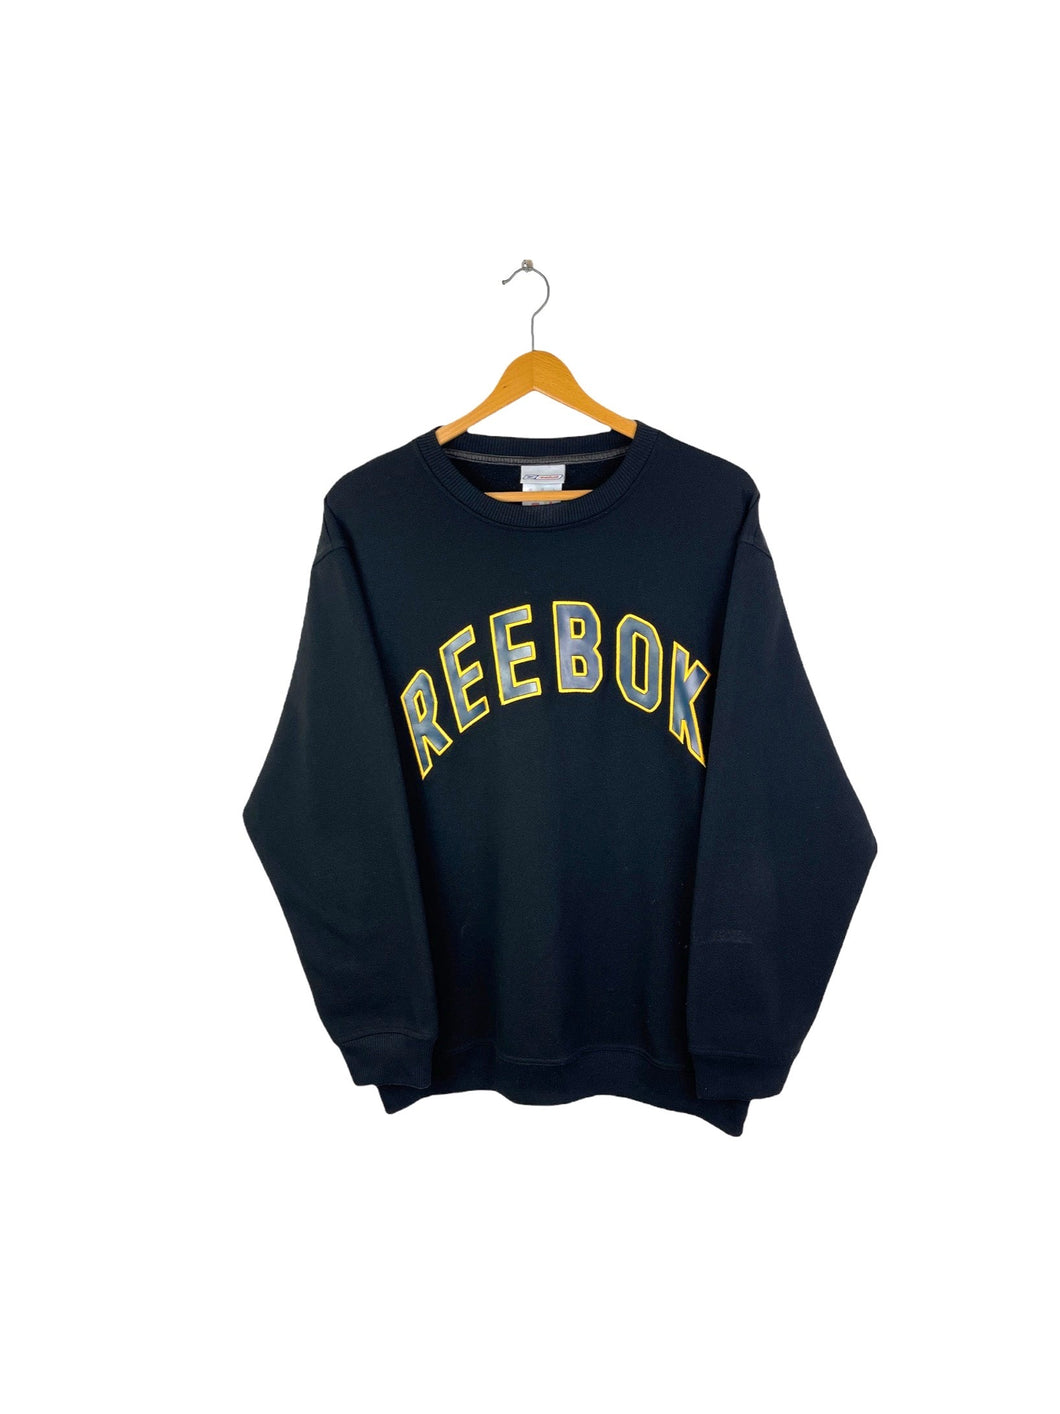 Reebok Sweatshirt - Large